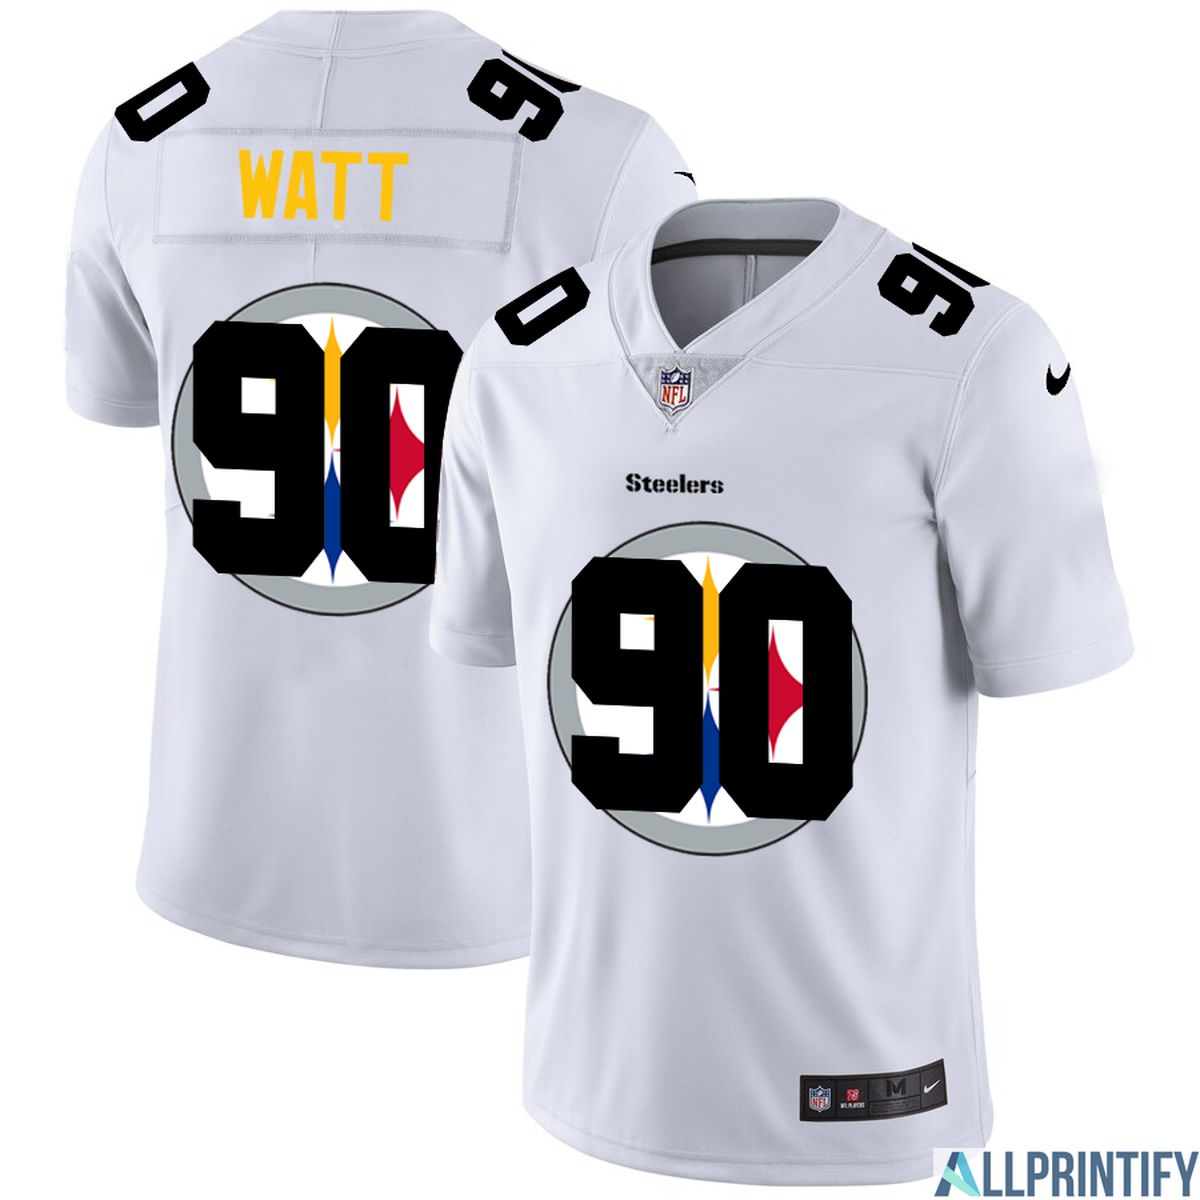 Trent Jordan Watt Pittsburgh Steelers 90 White Vapor Limited Jersey